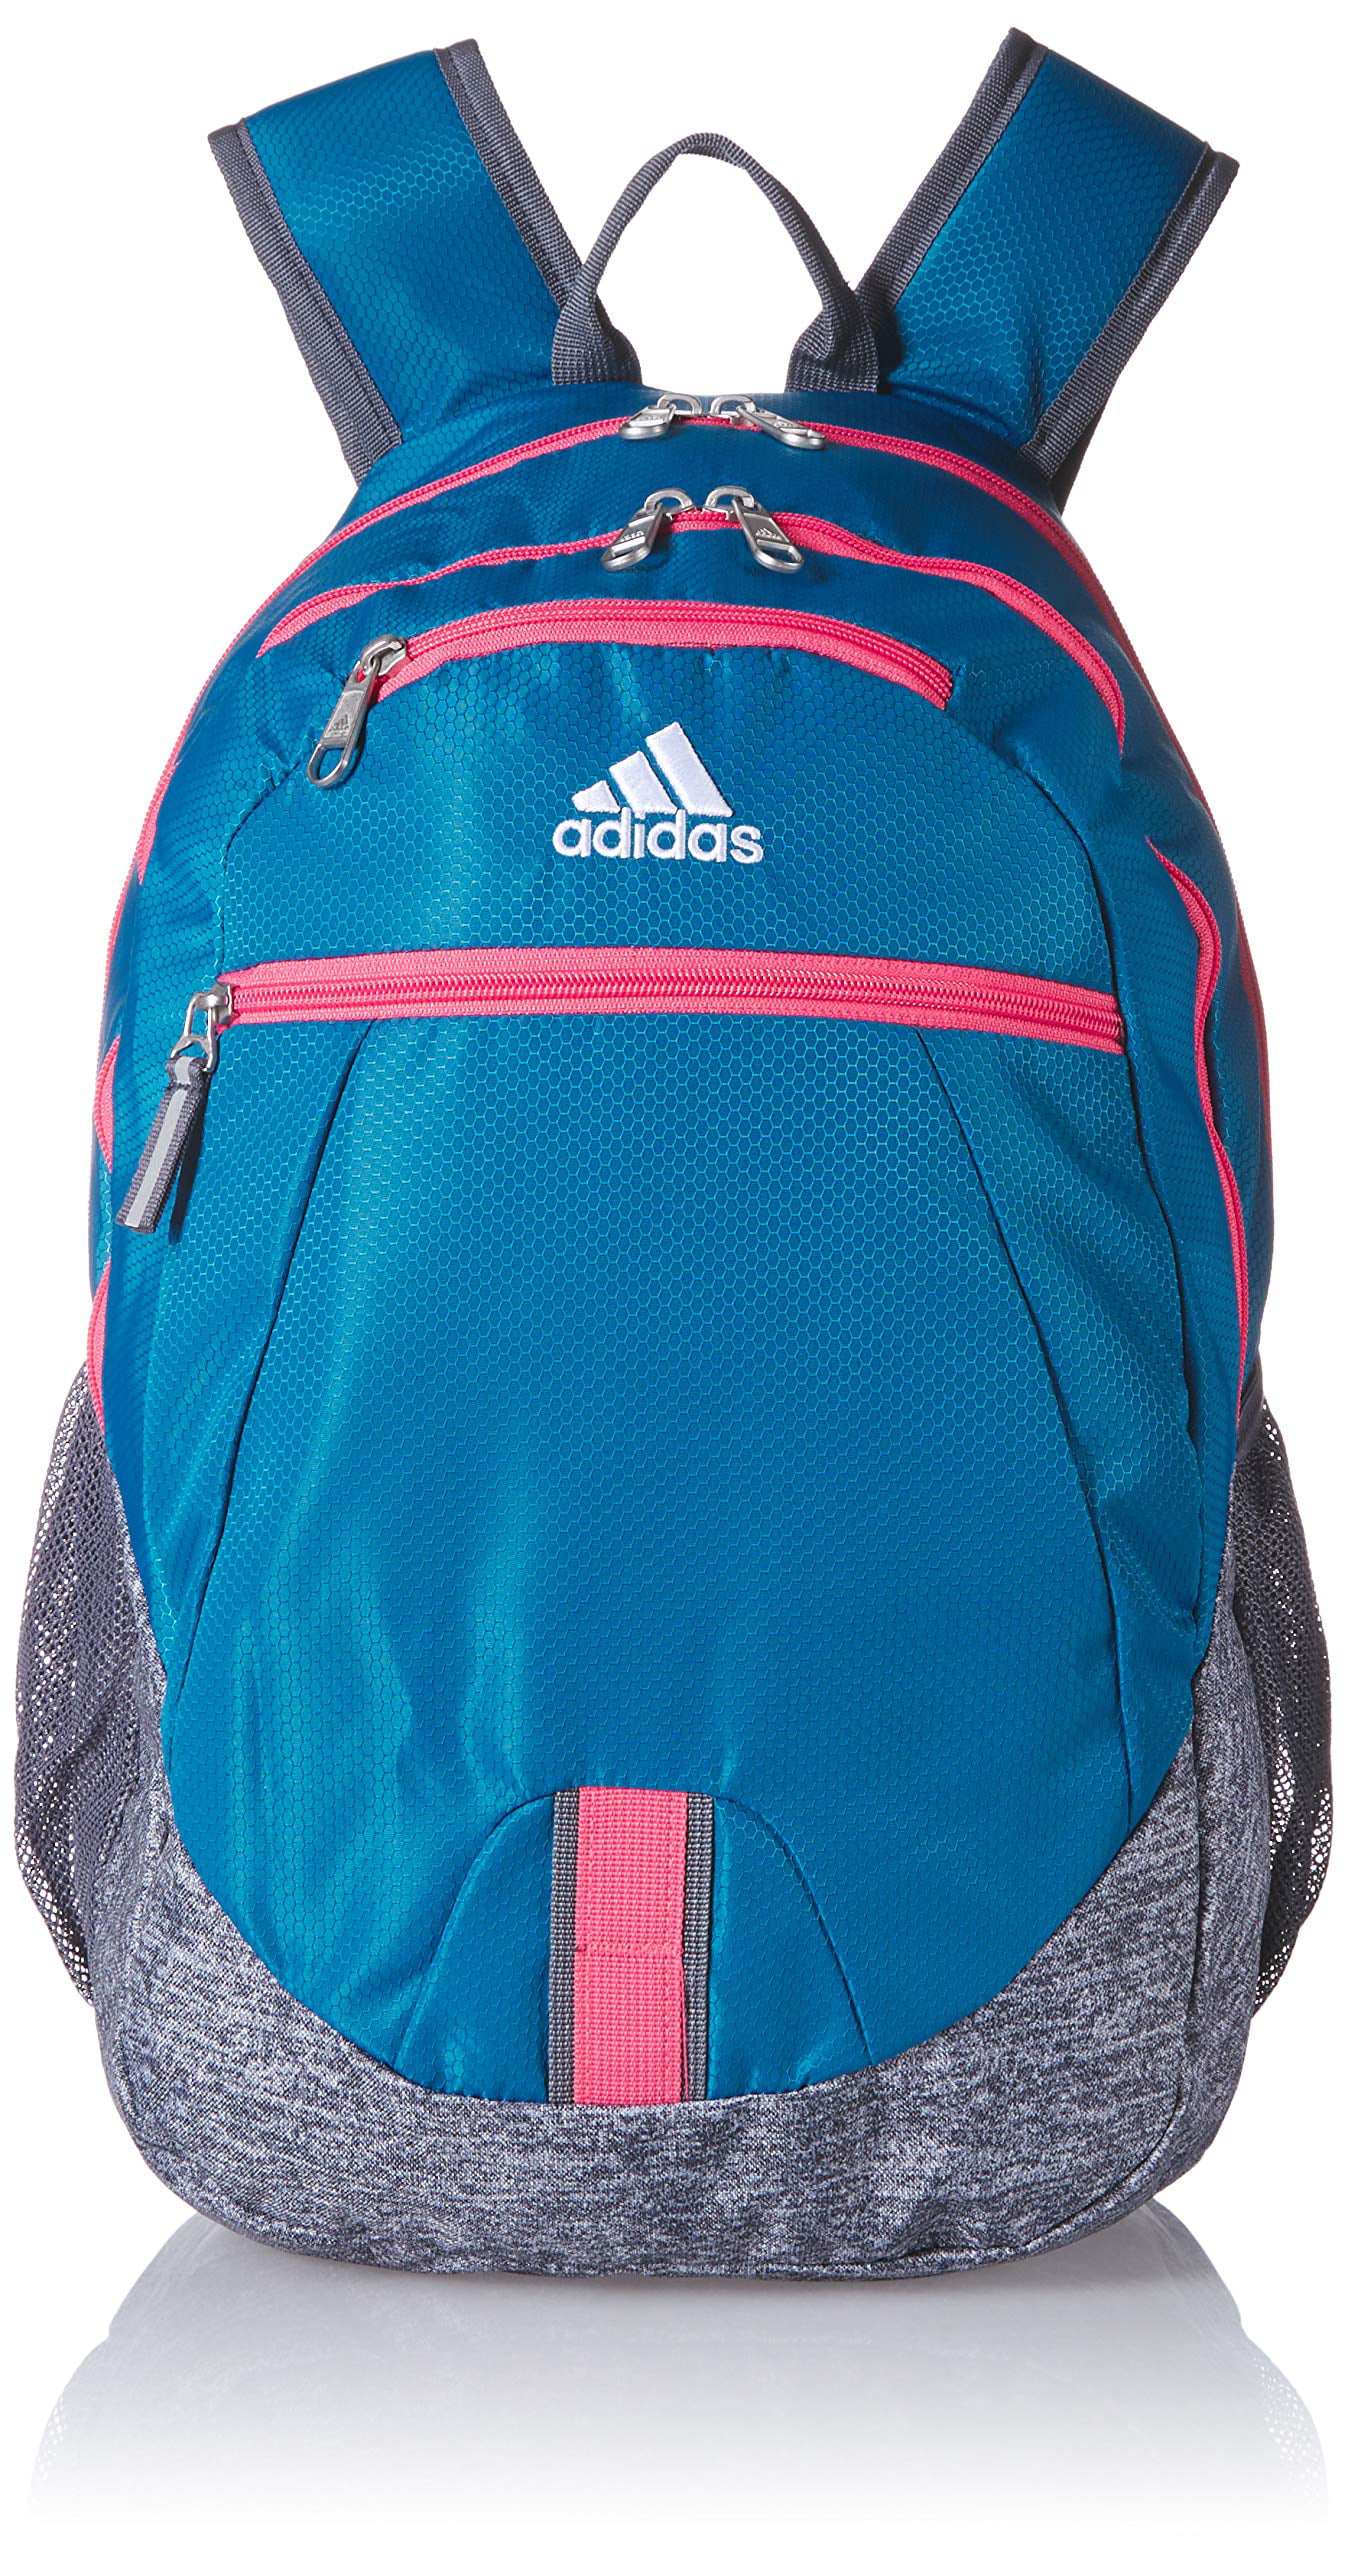 adidas foundation iii backpack